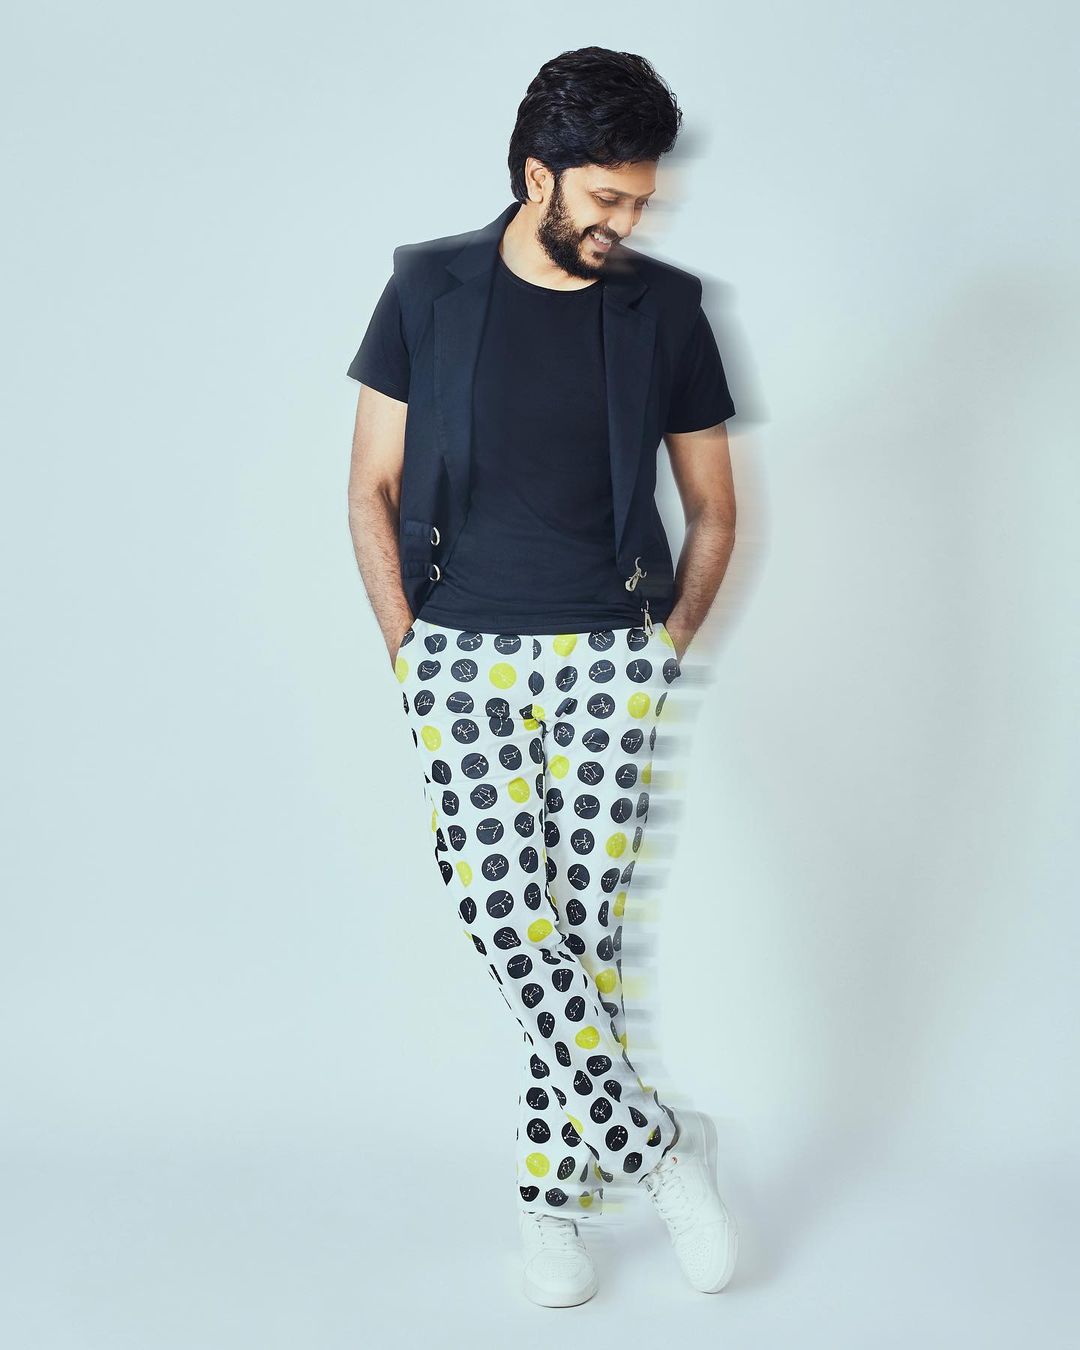 Riteish Deshmukh adds a pop of colour to his ensemble designed by Crimsoune Club.